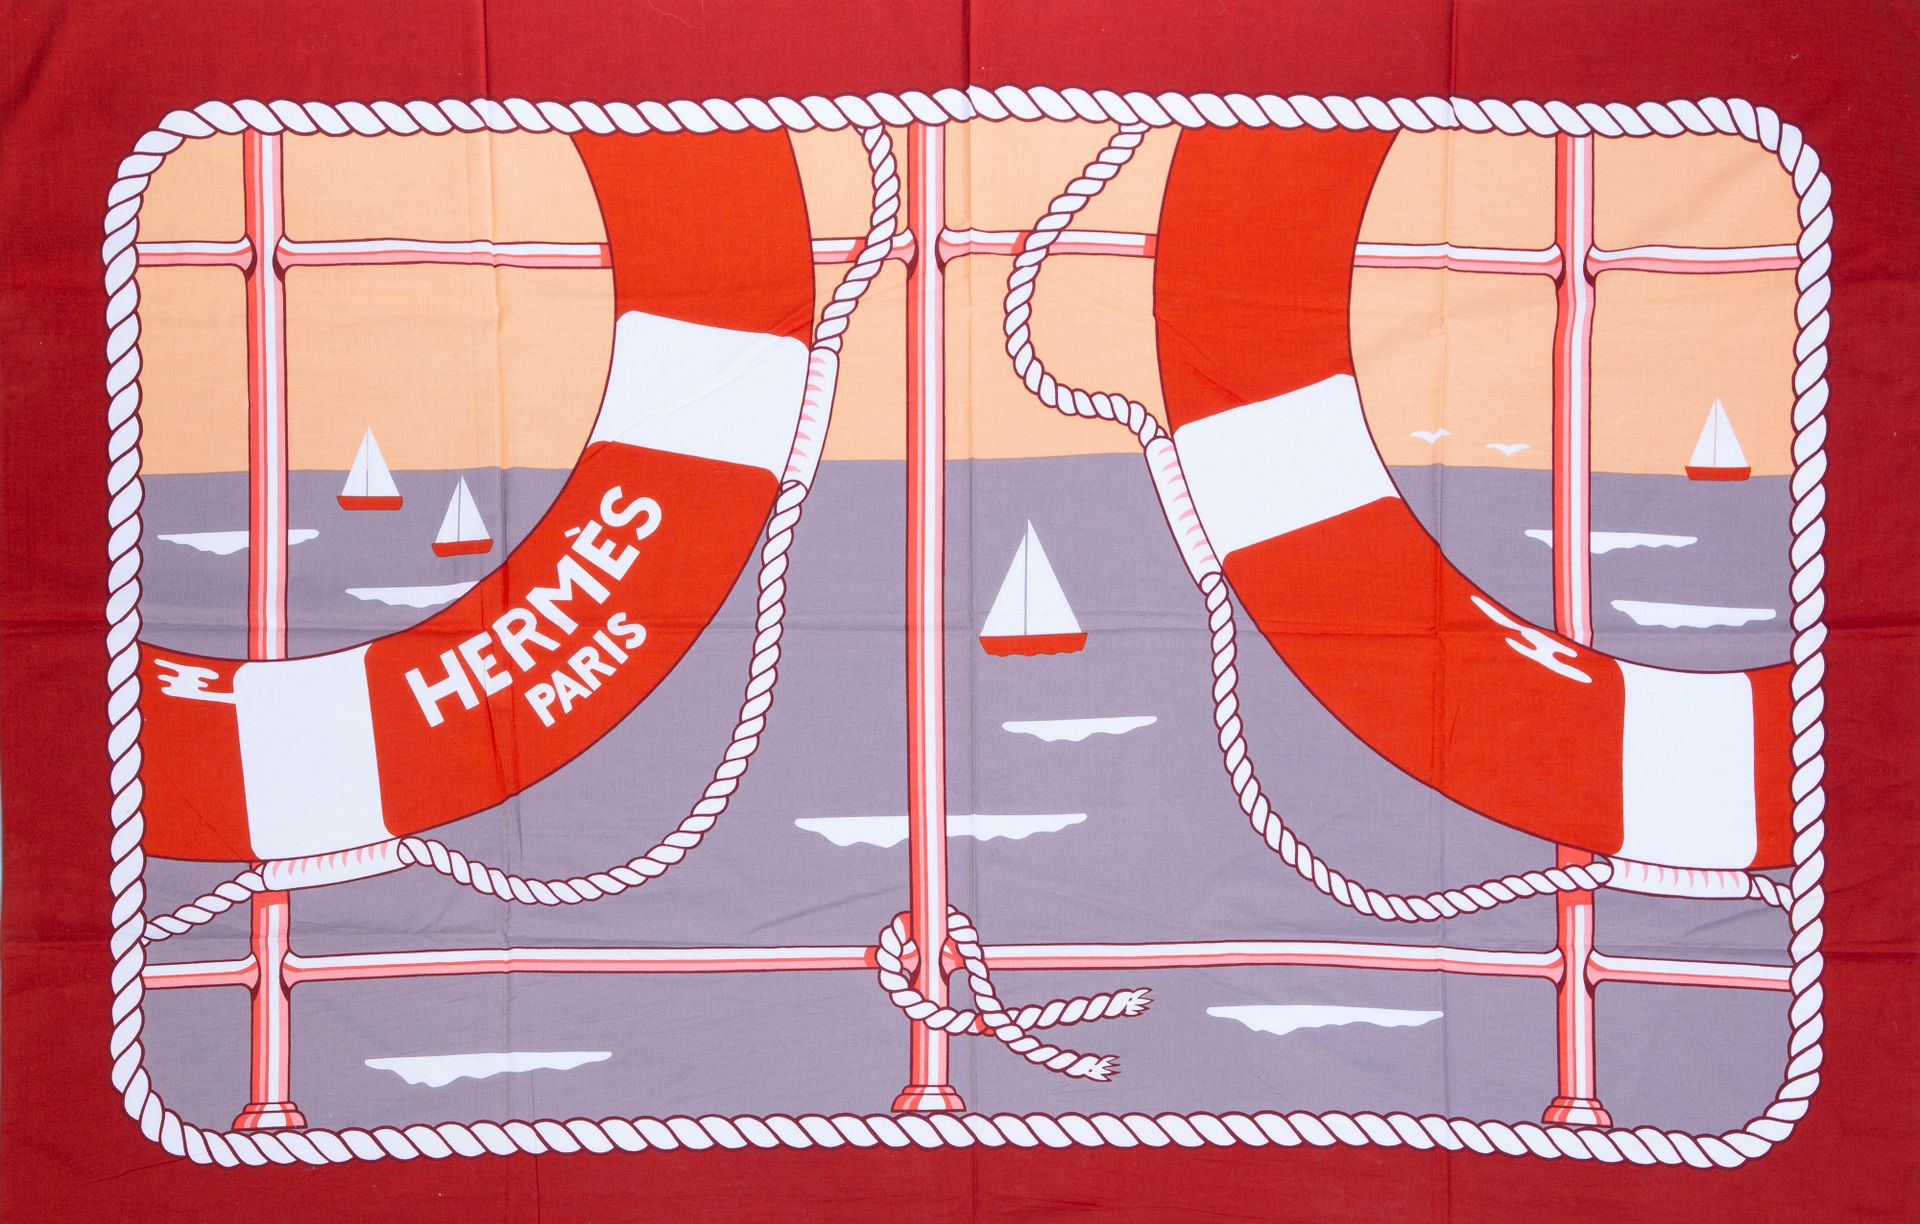 Null 埃尔梅斯。
棉质腰布，有灰色、红色、白色和橙色色调的海景、绳索和浮标的图案，赭石色的边框。
高度 : 140 cm140厘米 - 宽度 : 95厘米